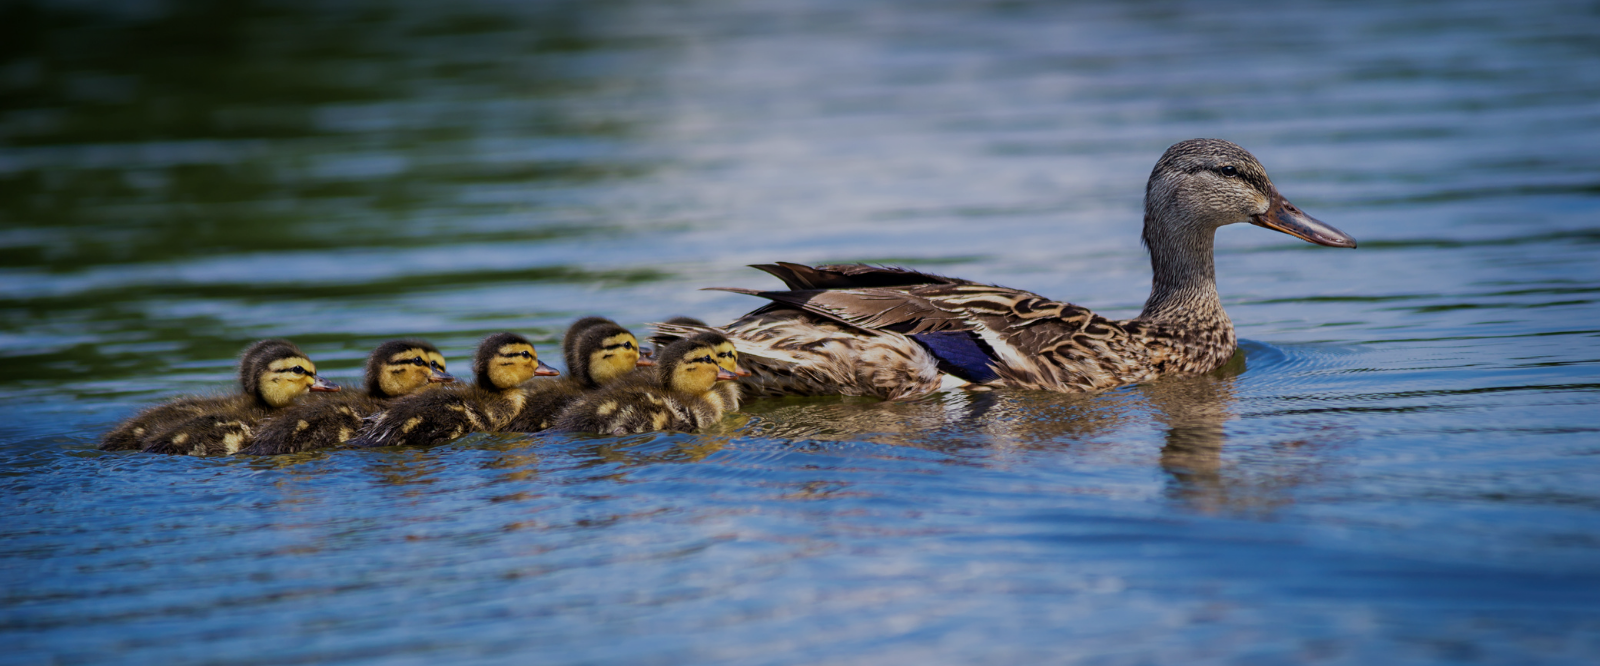 momma and baby ducks swimming